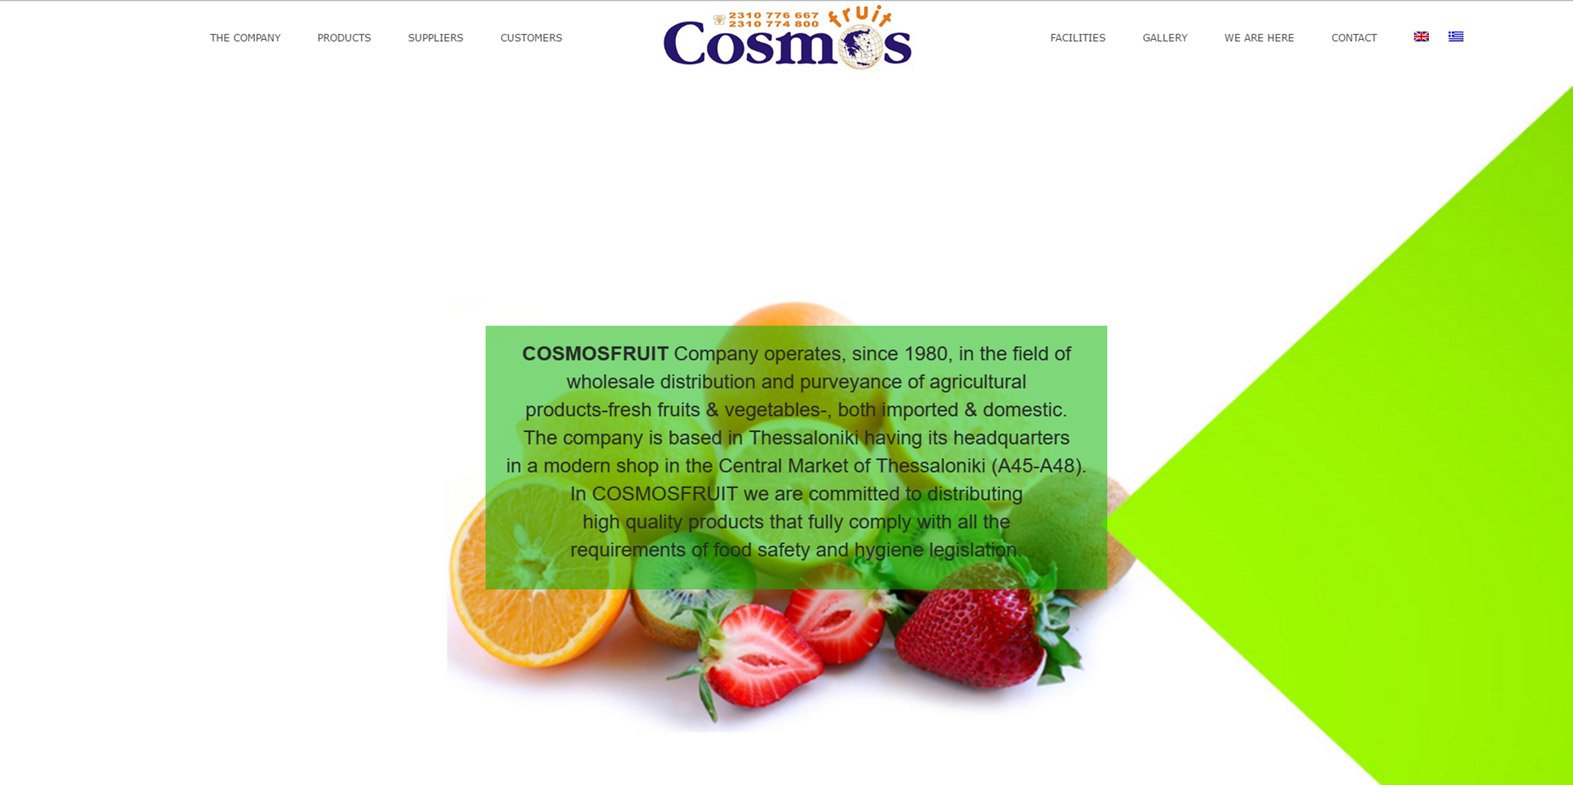 Cosmofruits market